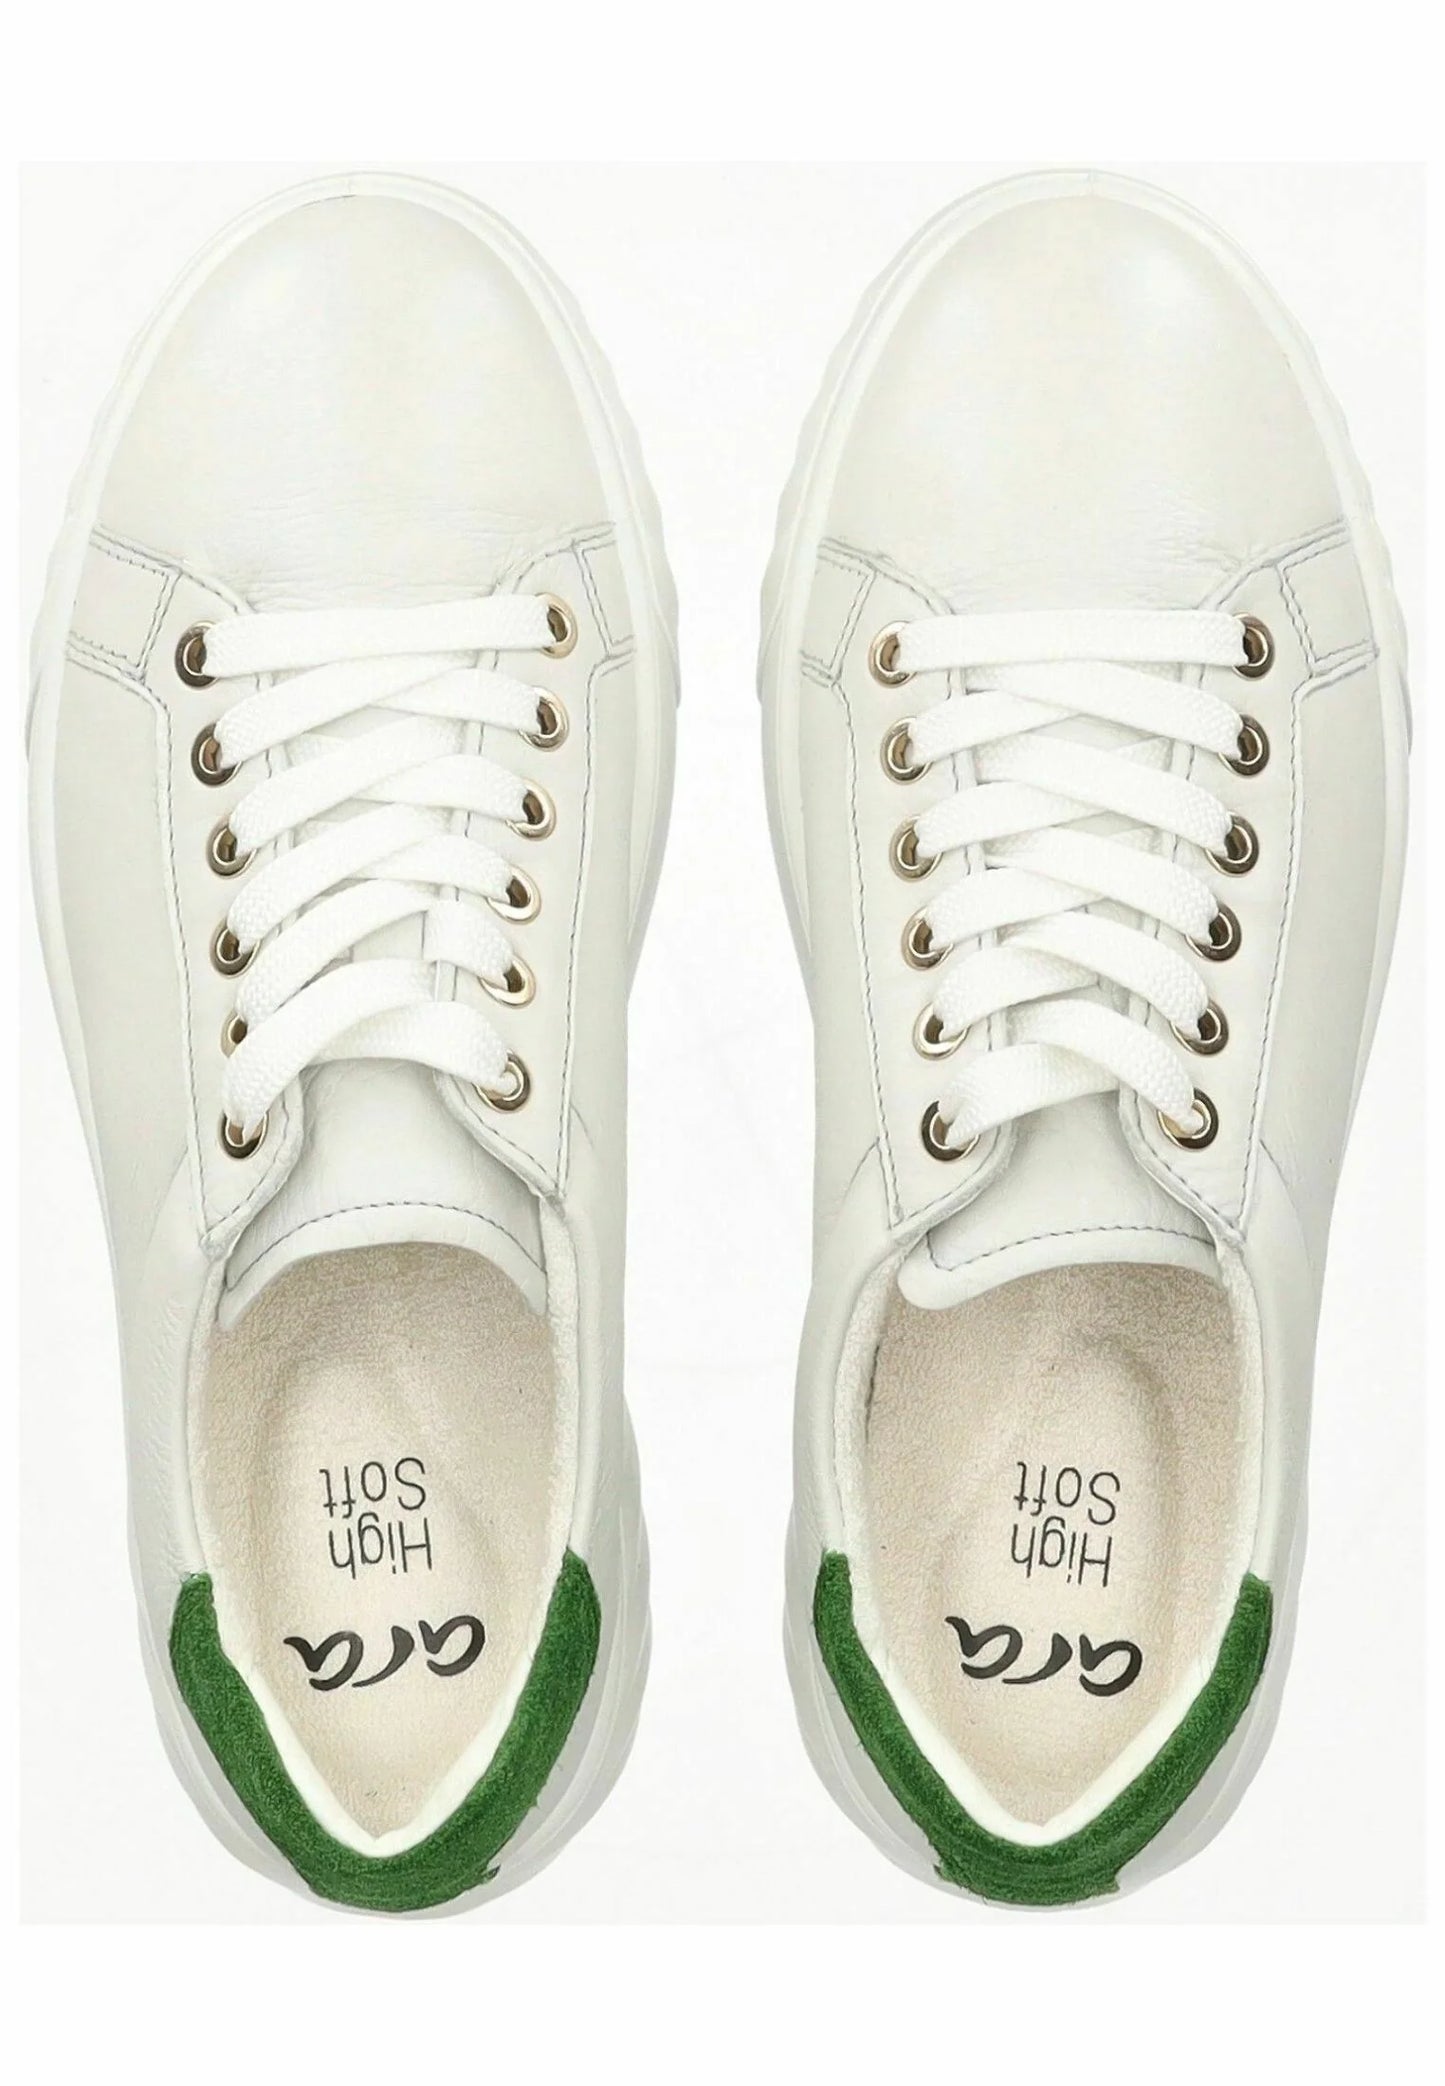 Ara Women's 1246523 Monaco Leather Sneakers Nebbia Grass White